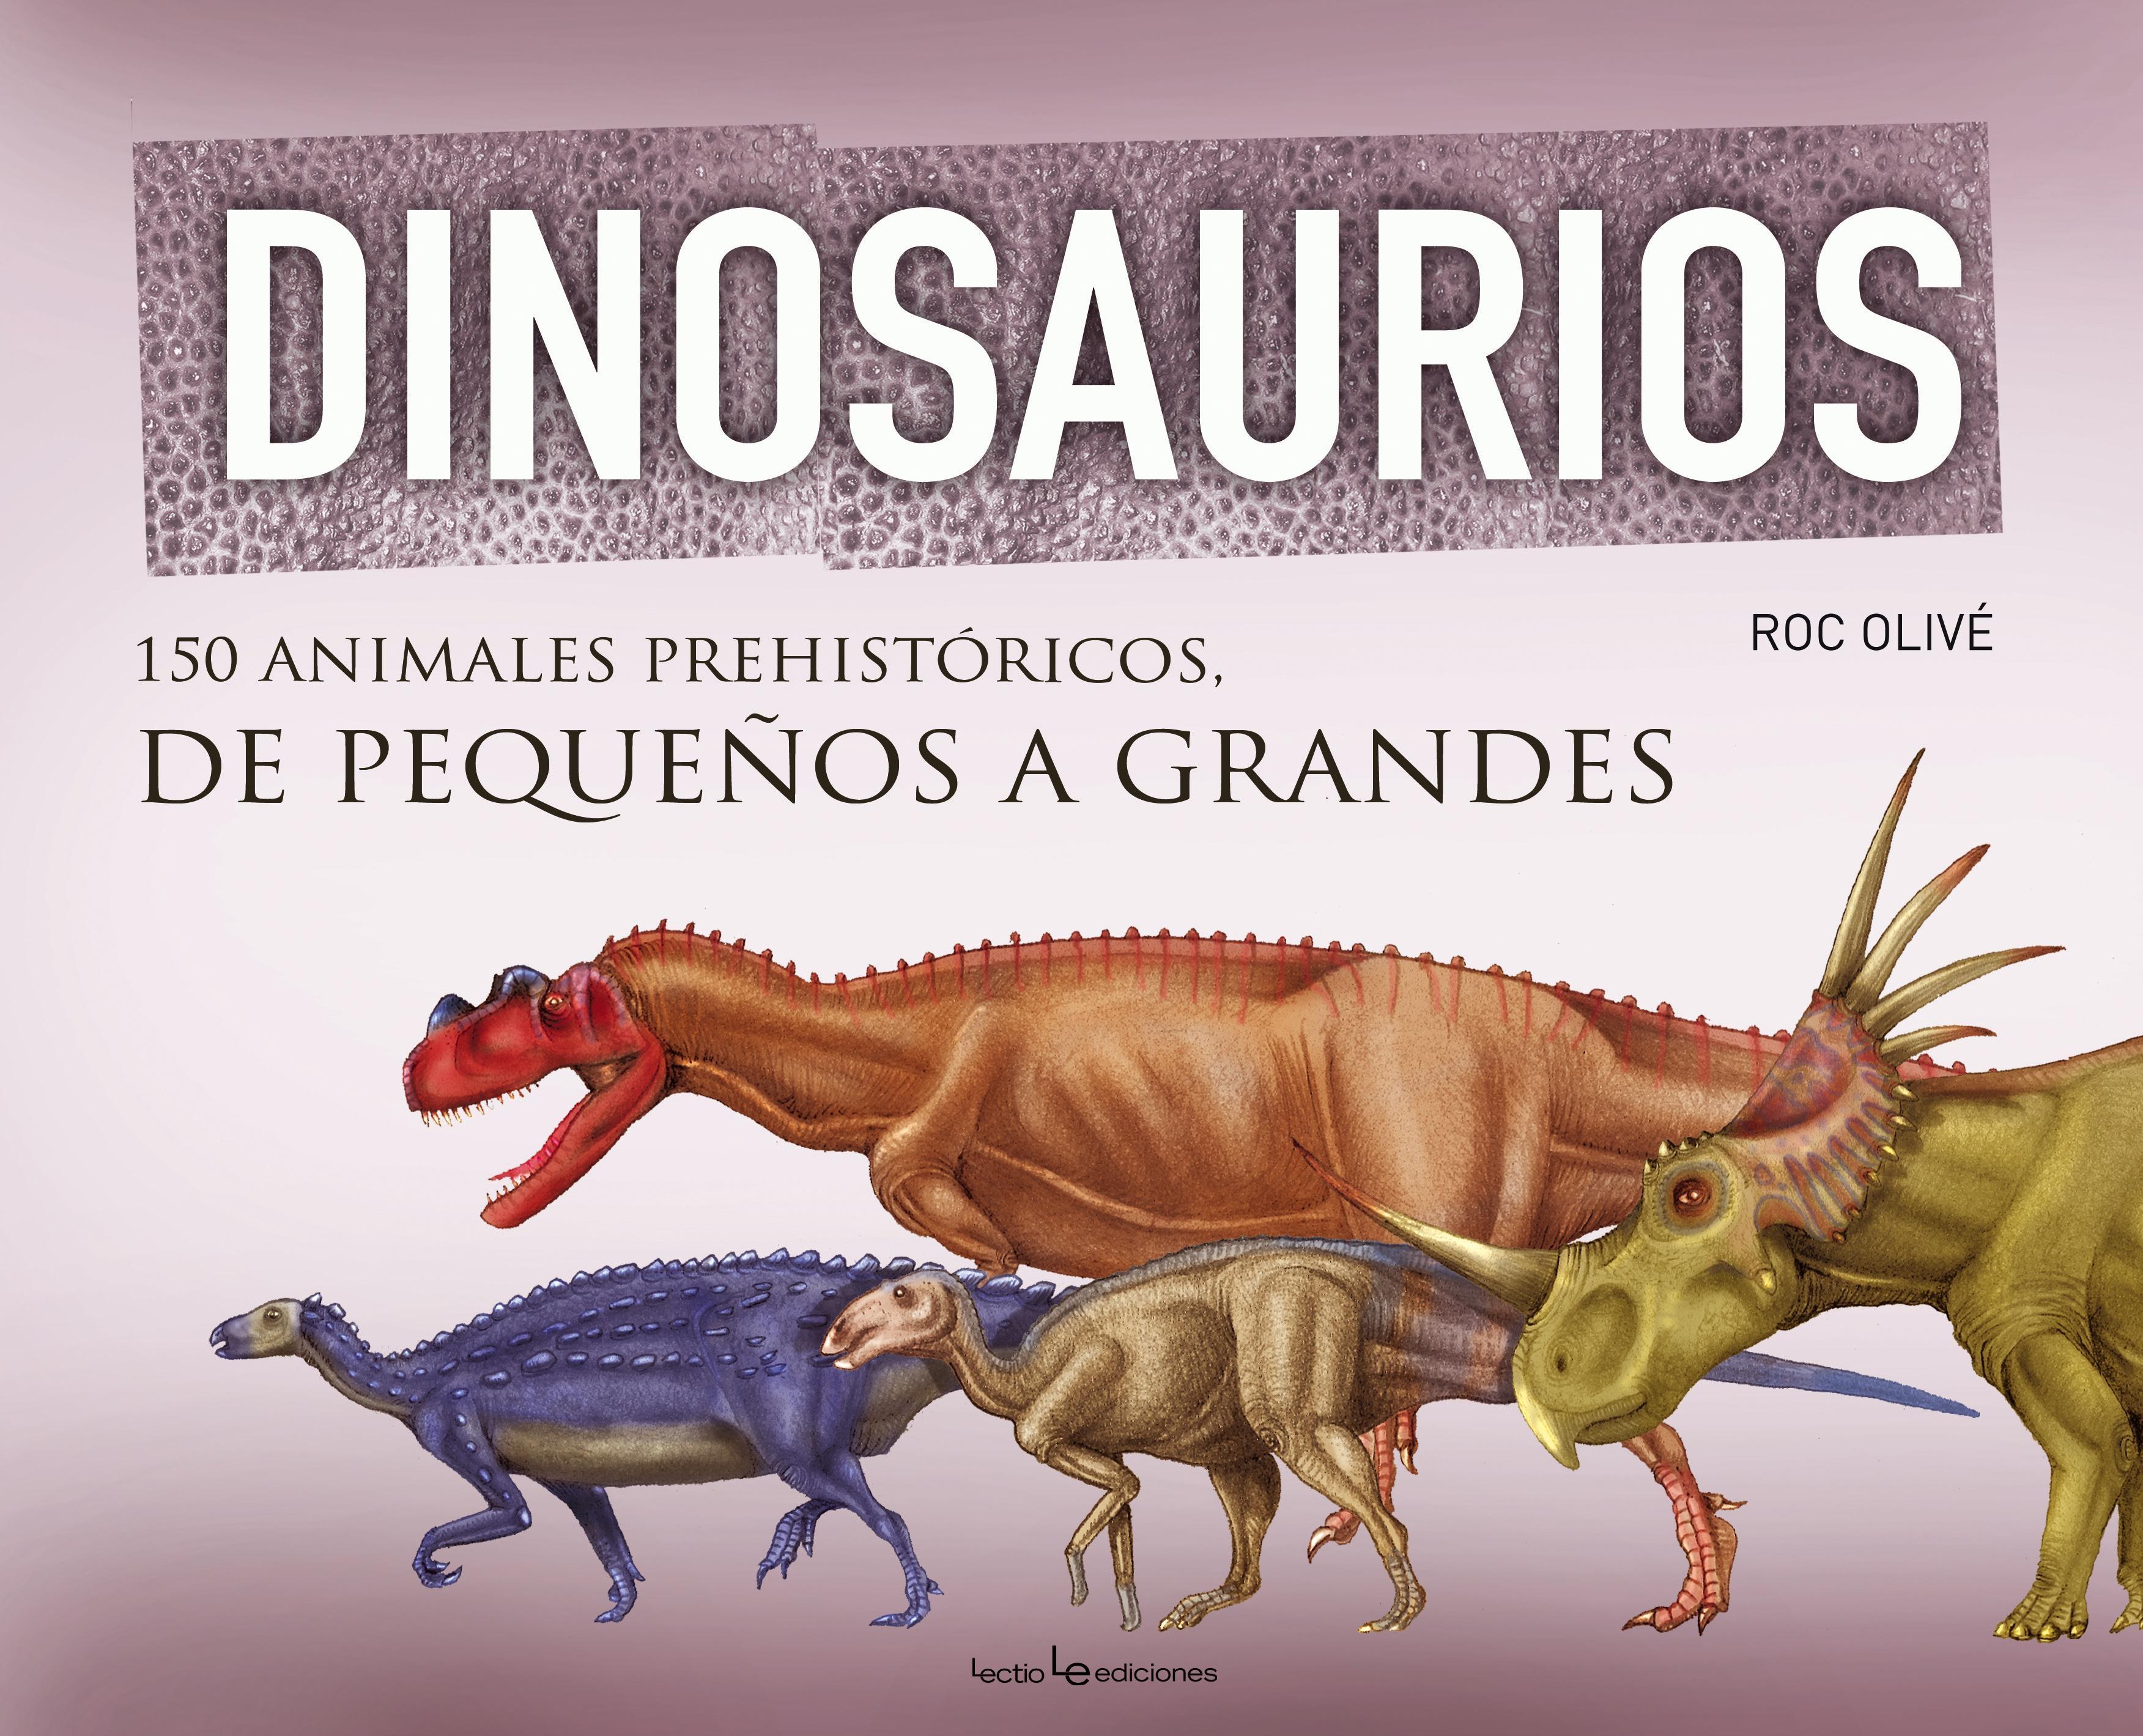 Dinosaurios "150 animales prehistóricos, de pequeños a grandes"